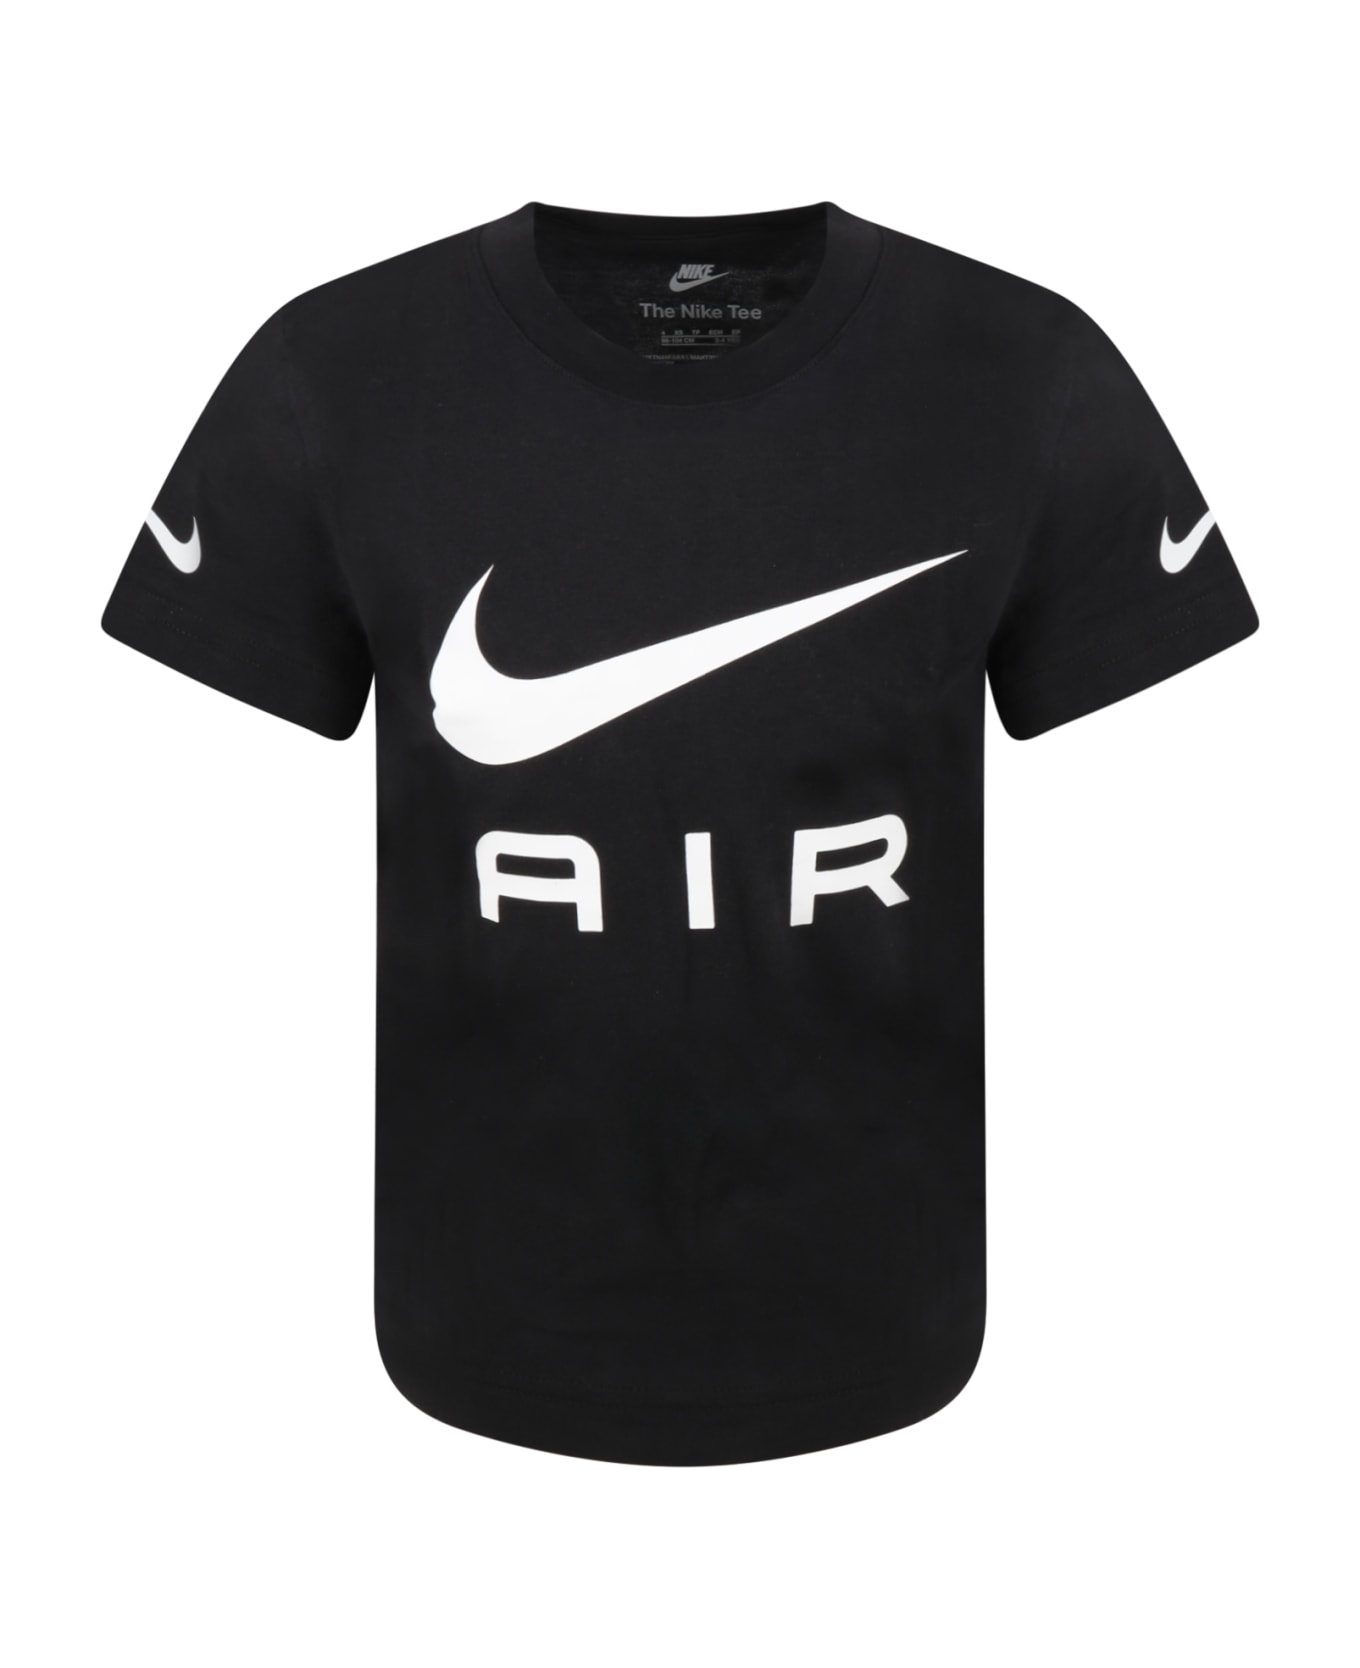 Nike Black T-shirt For Kids With Swoosh - Black